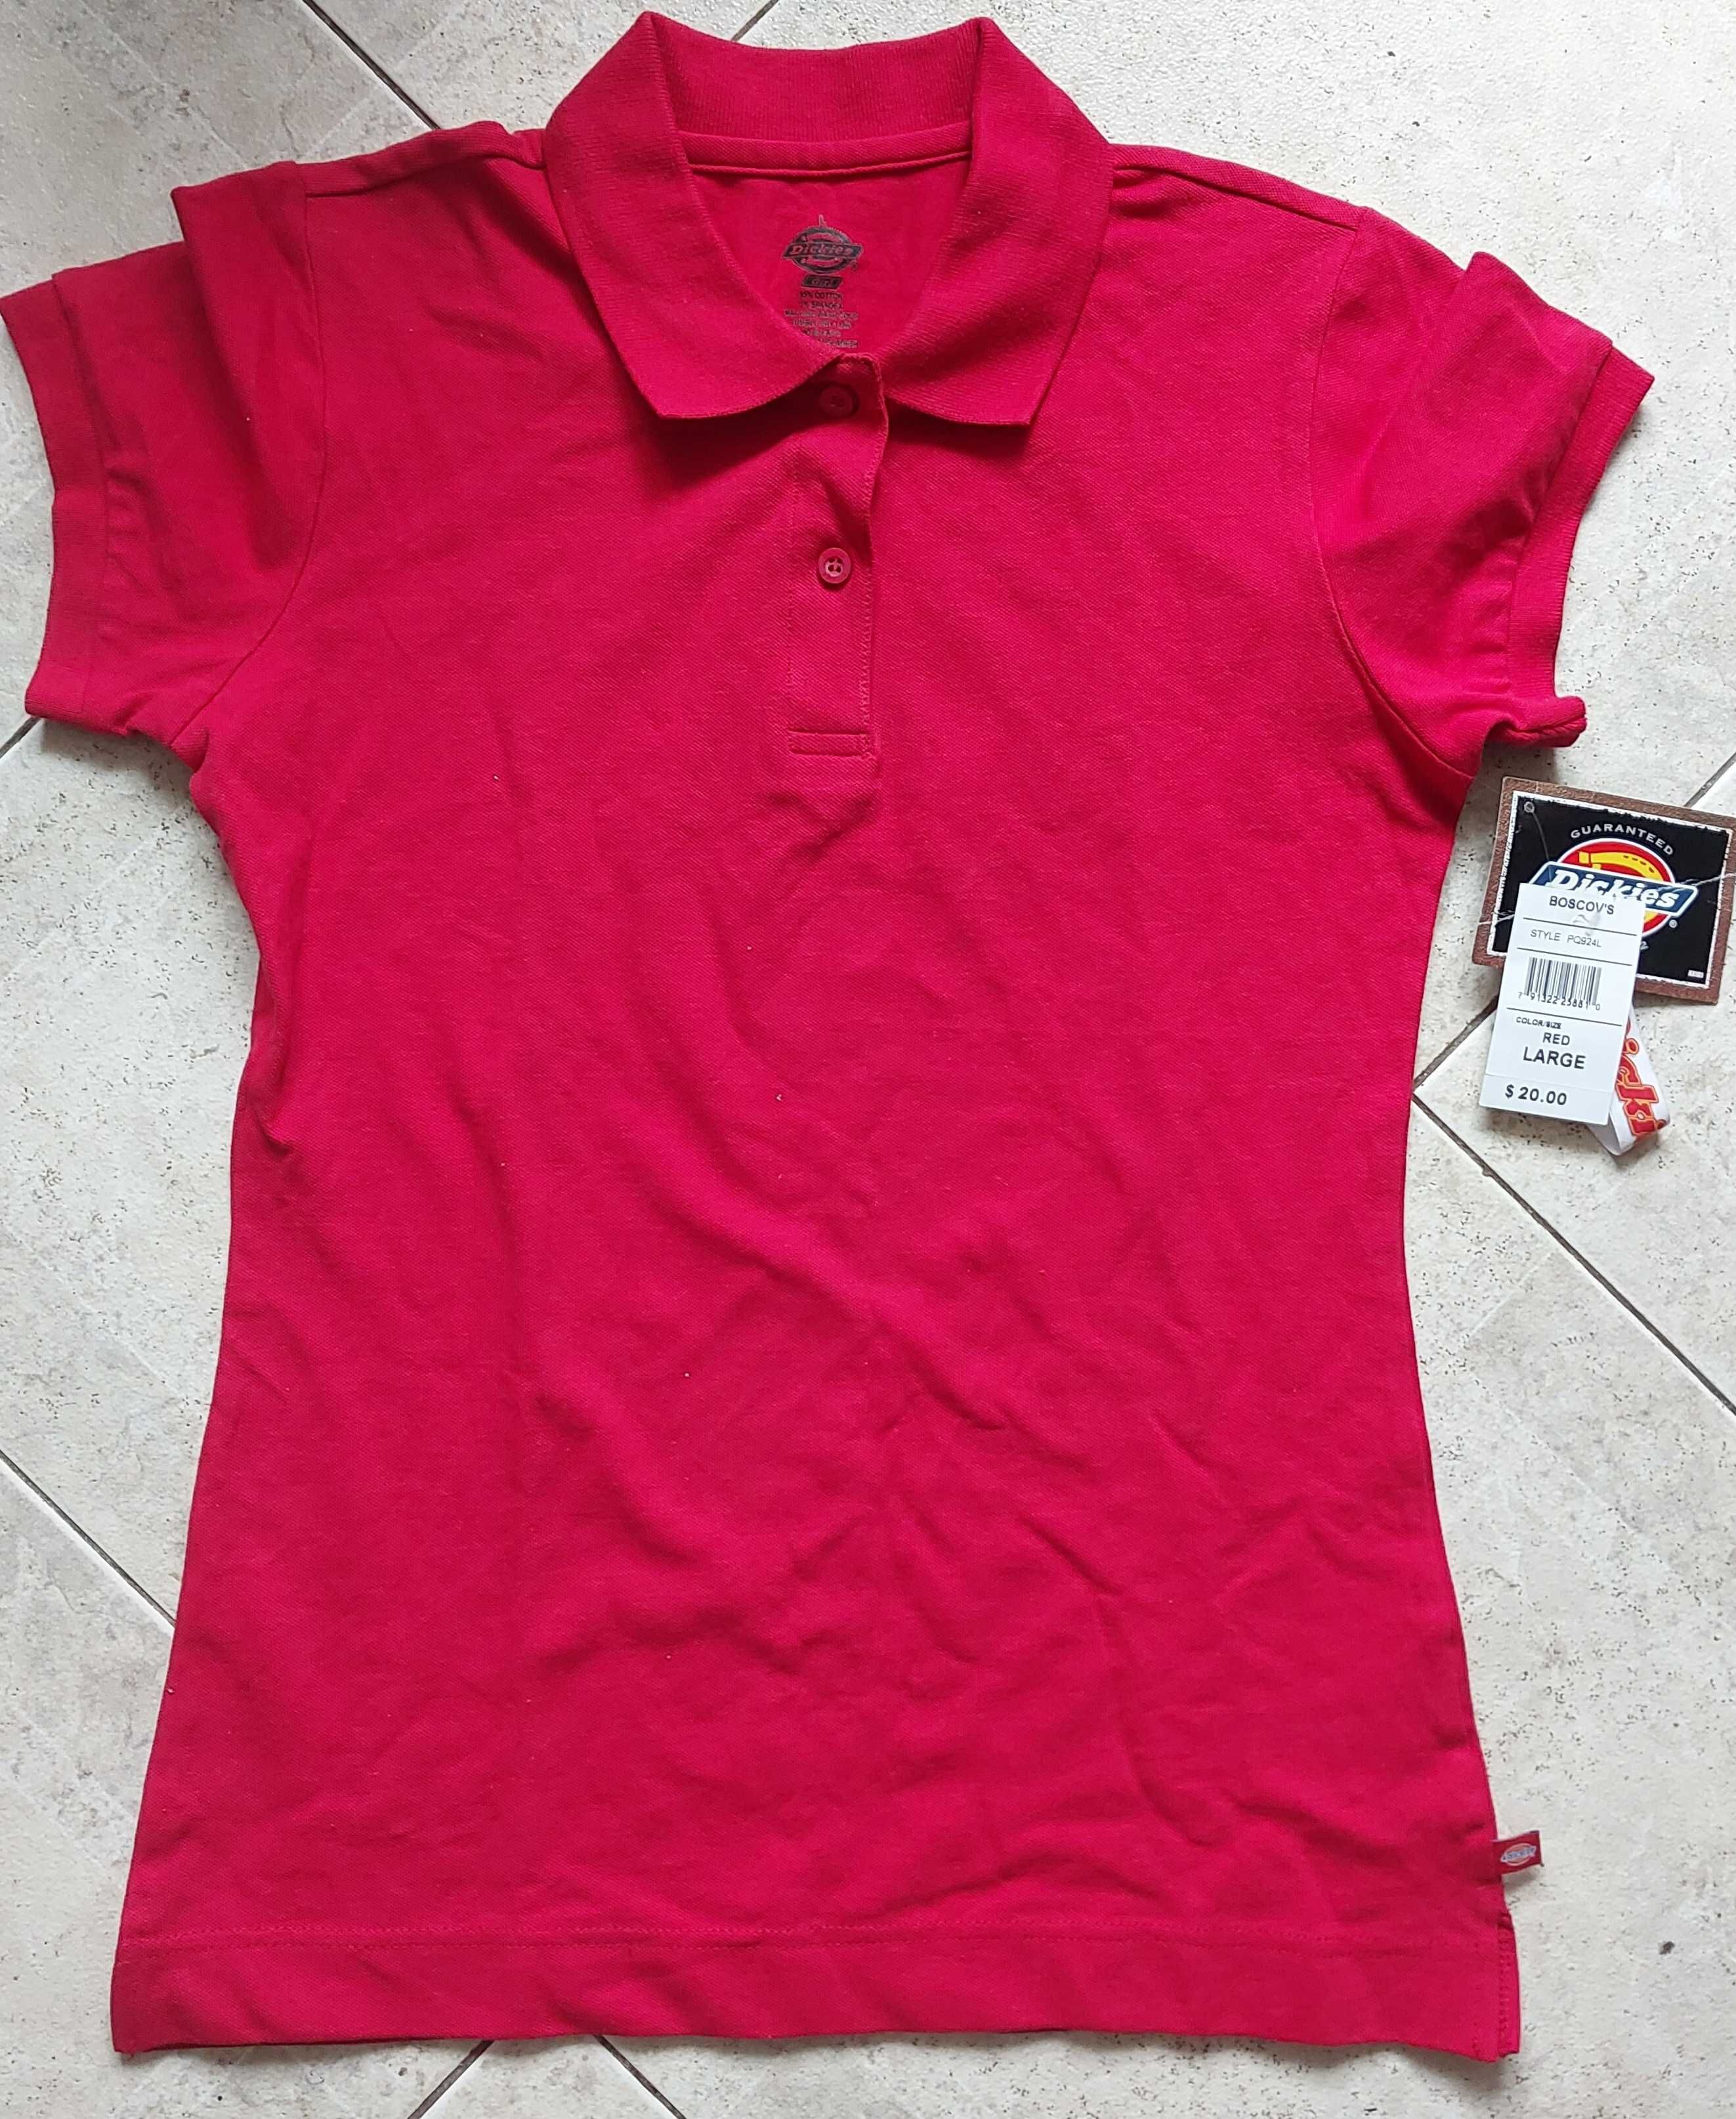 женская красная футболка поло Dickies размер L